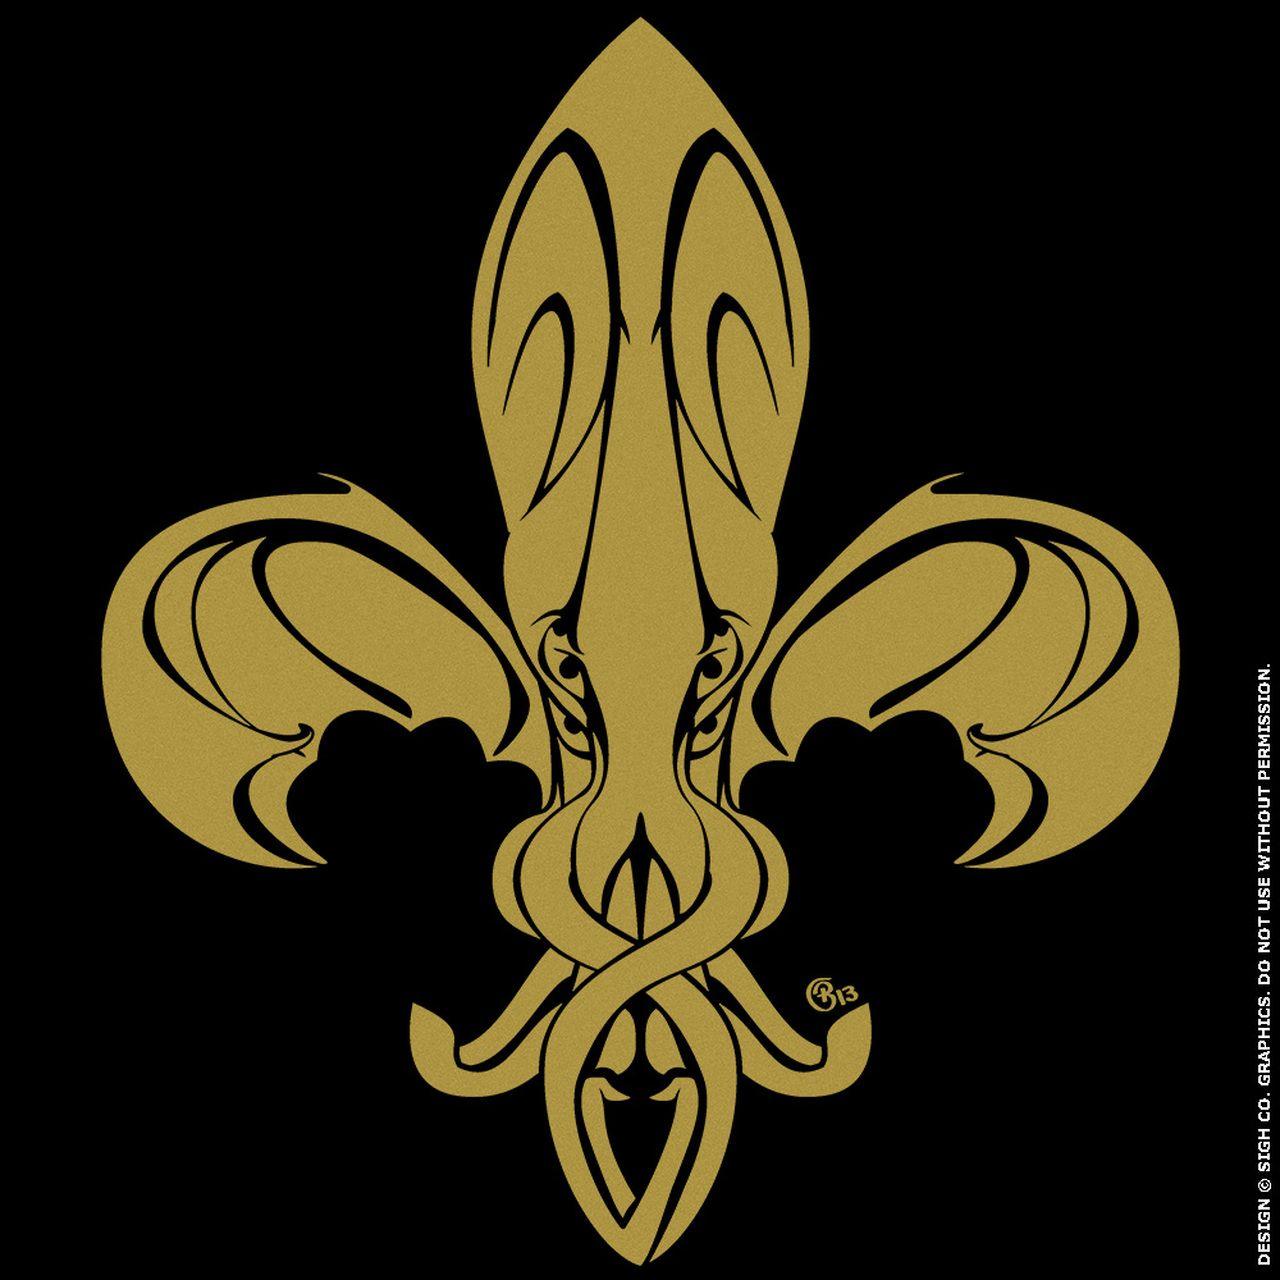 Cthulhu Logo - Saint Cthulhu Fleur-de-lis